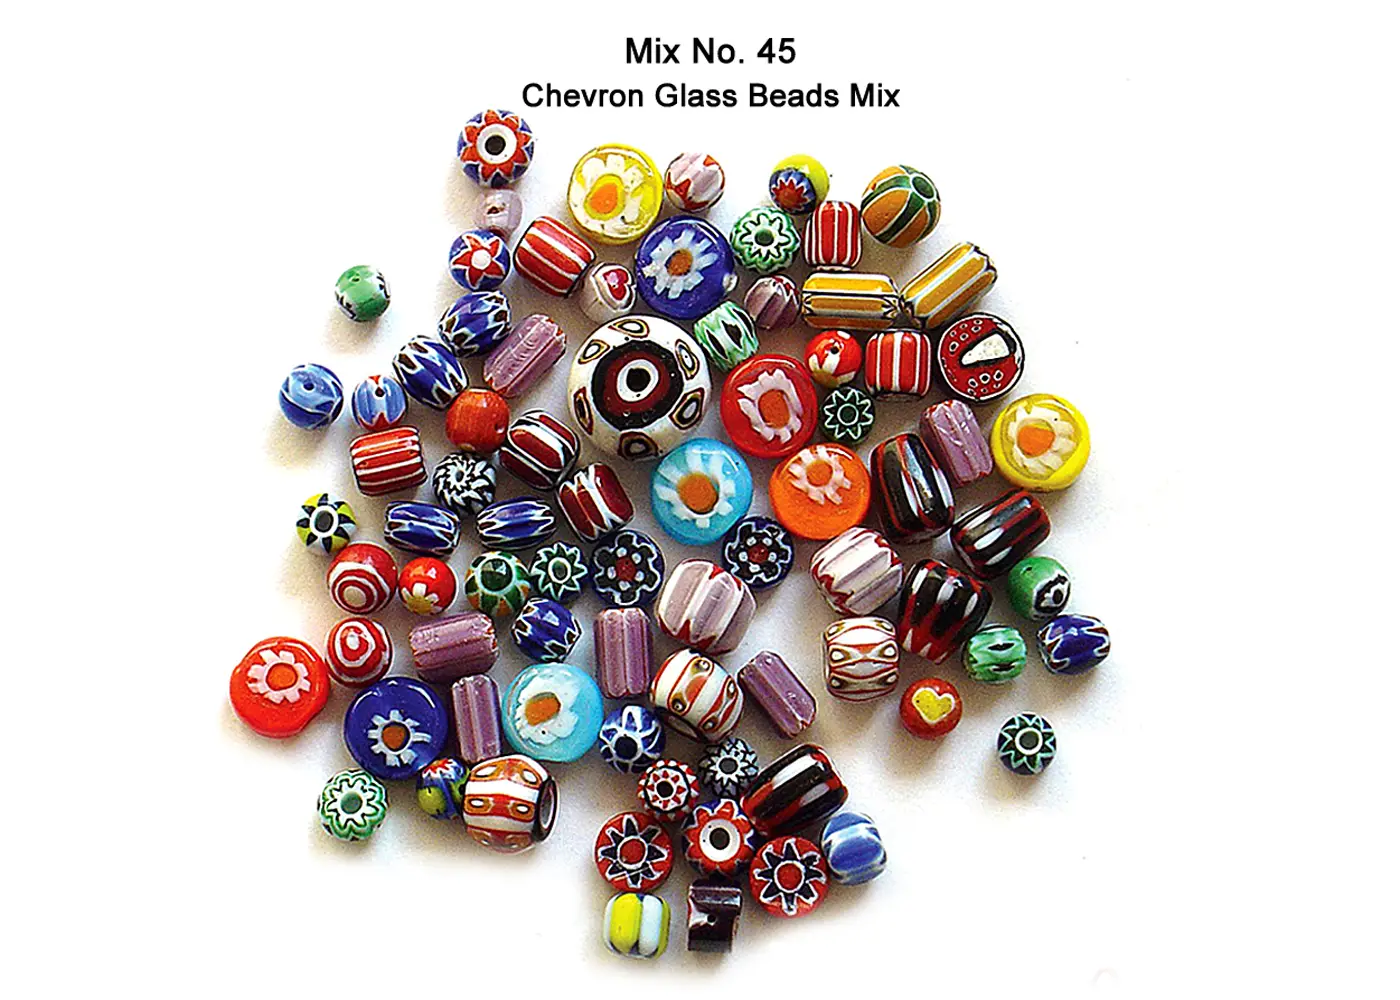 Chevron Glass Beads Mix